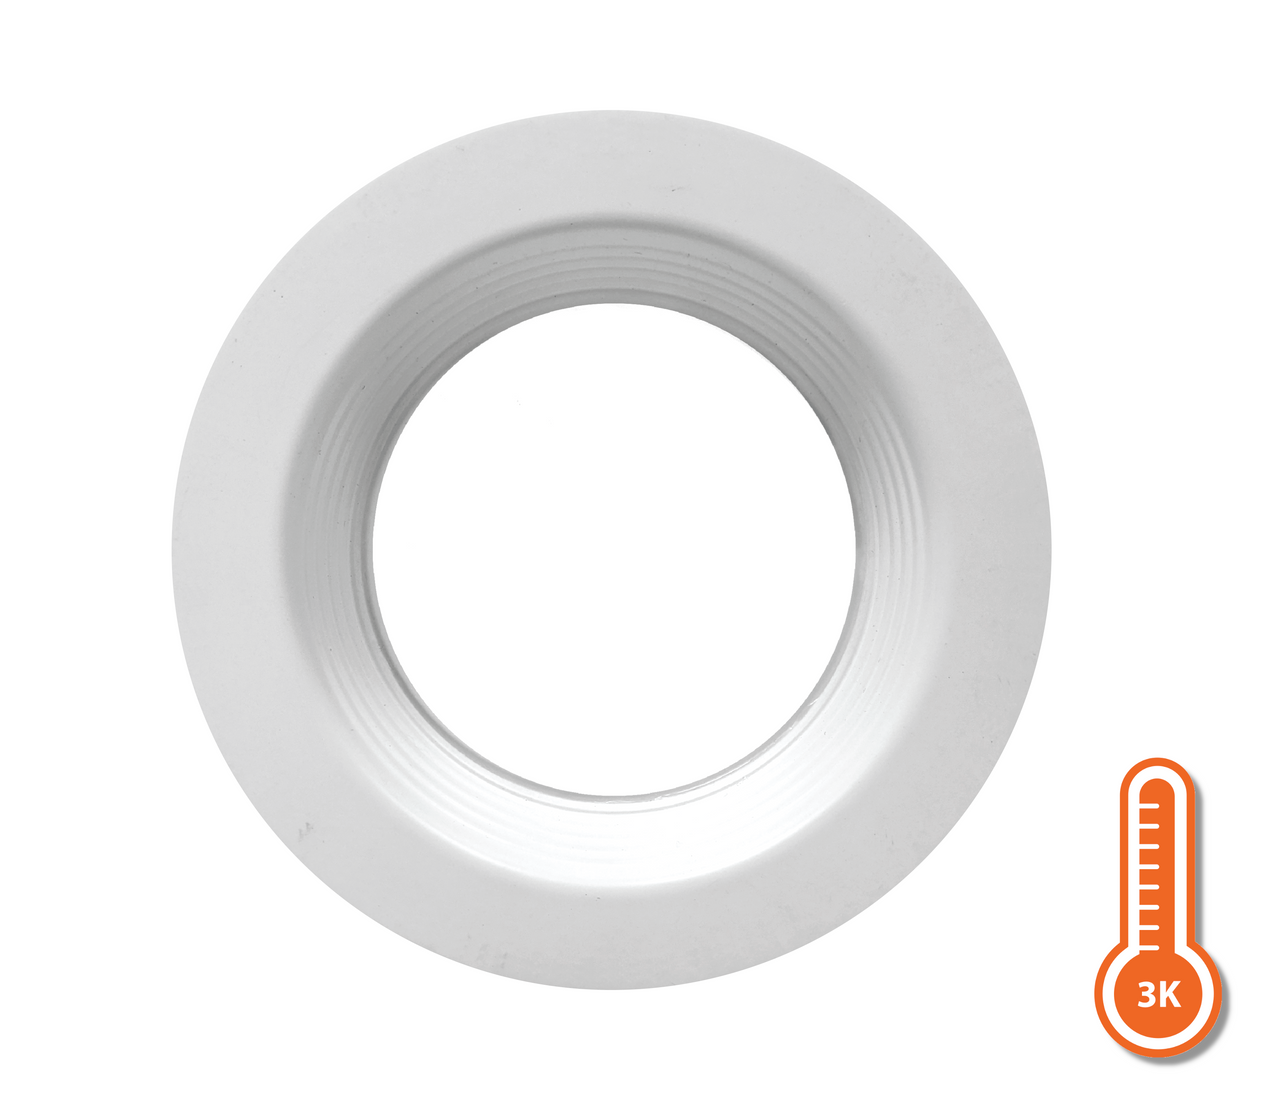 NICOR DLR46071203KWHBF DLR4(v6) 4-inch White 3000K Recessed LED Downlight with Baffle